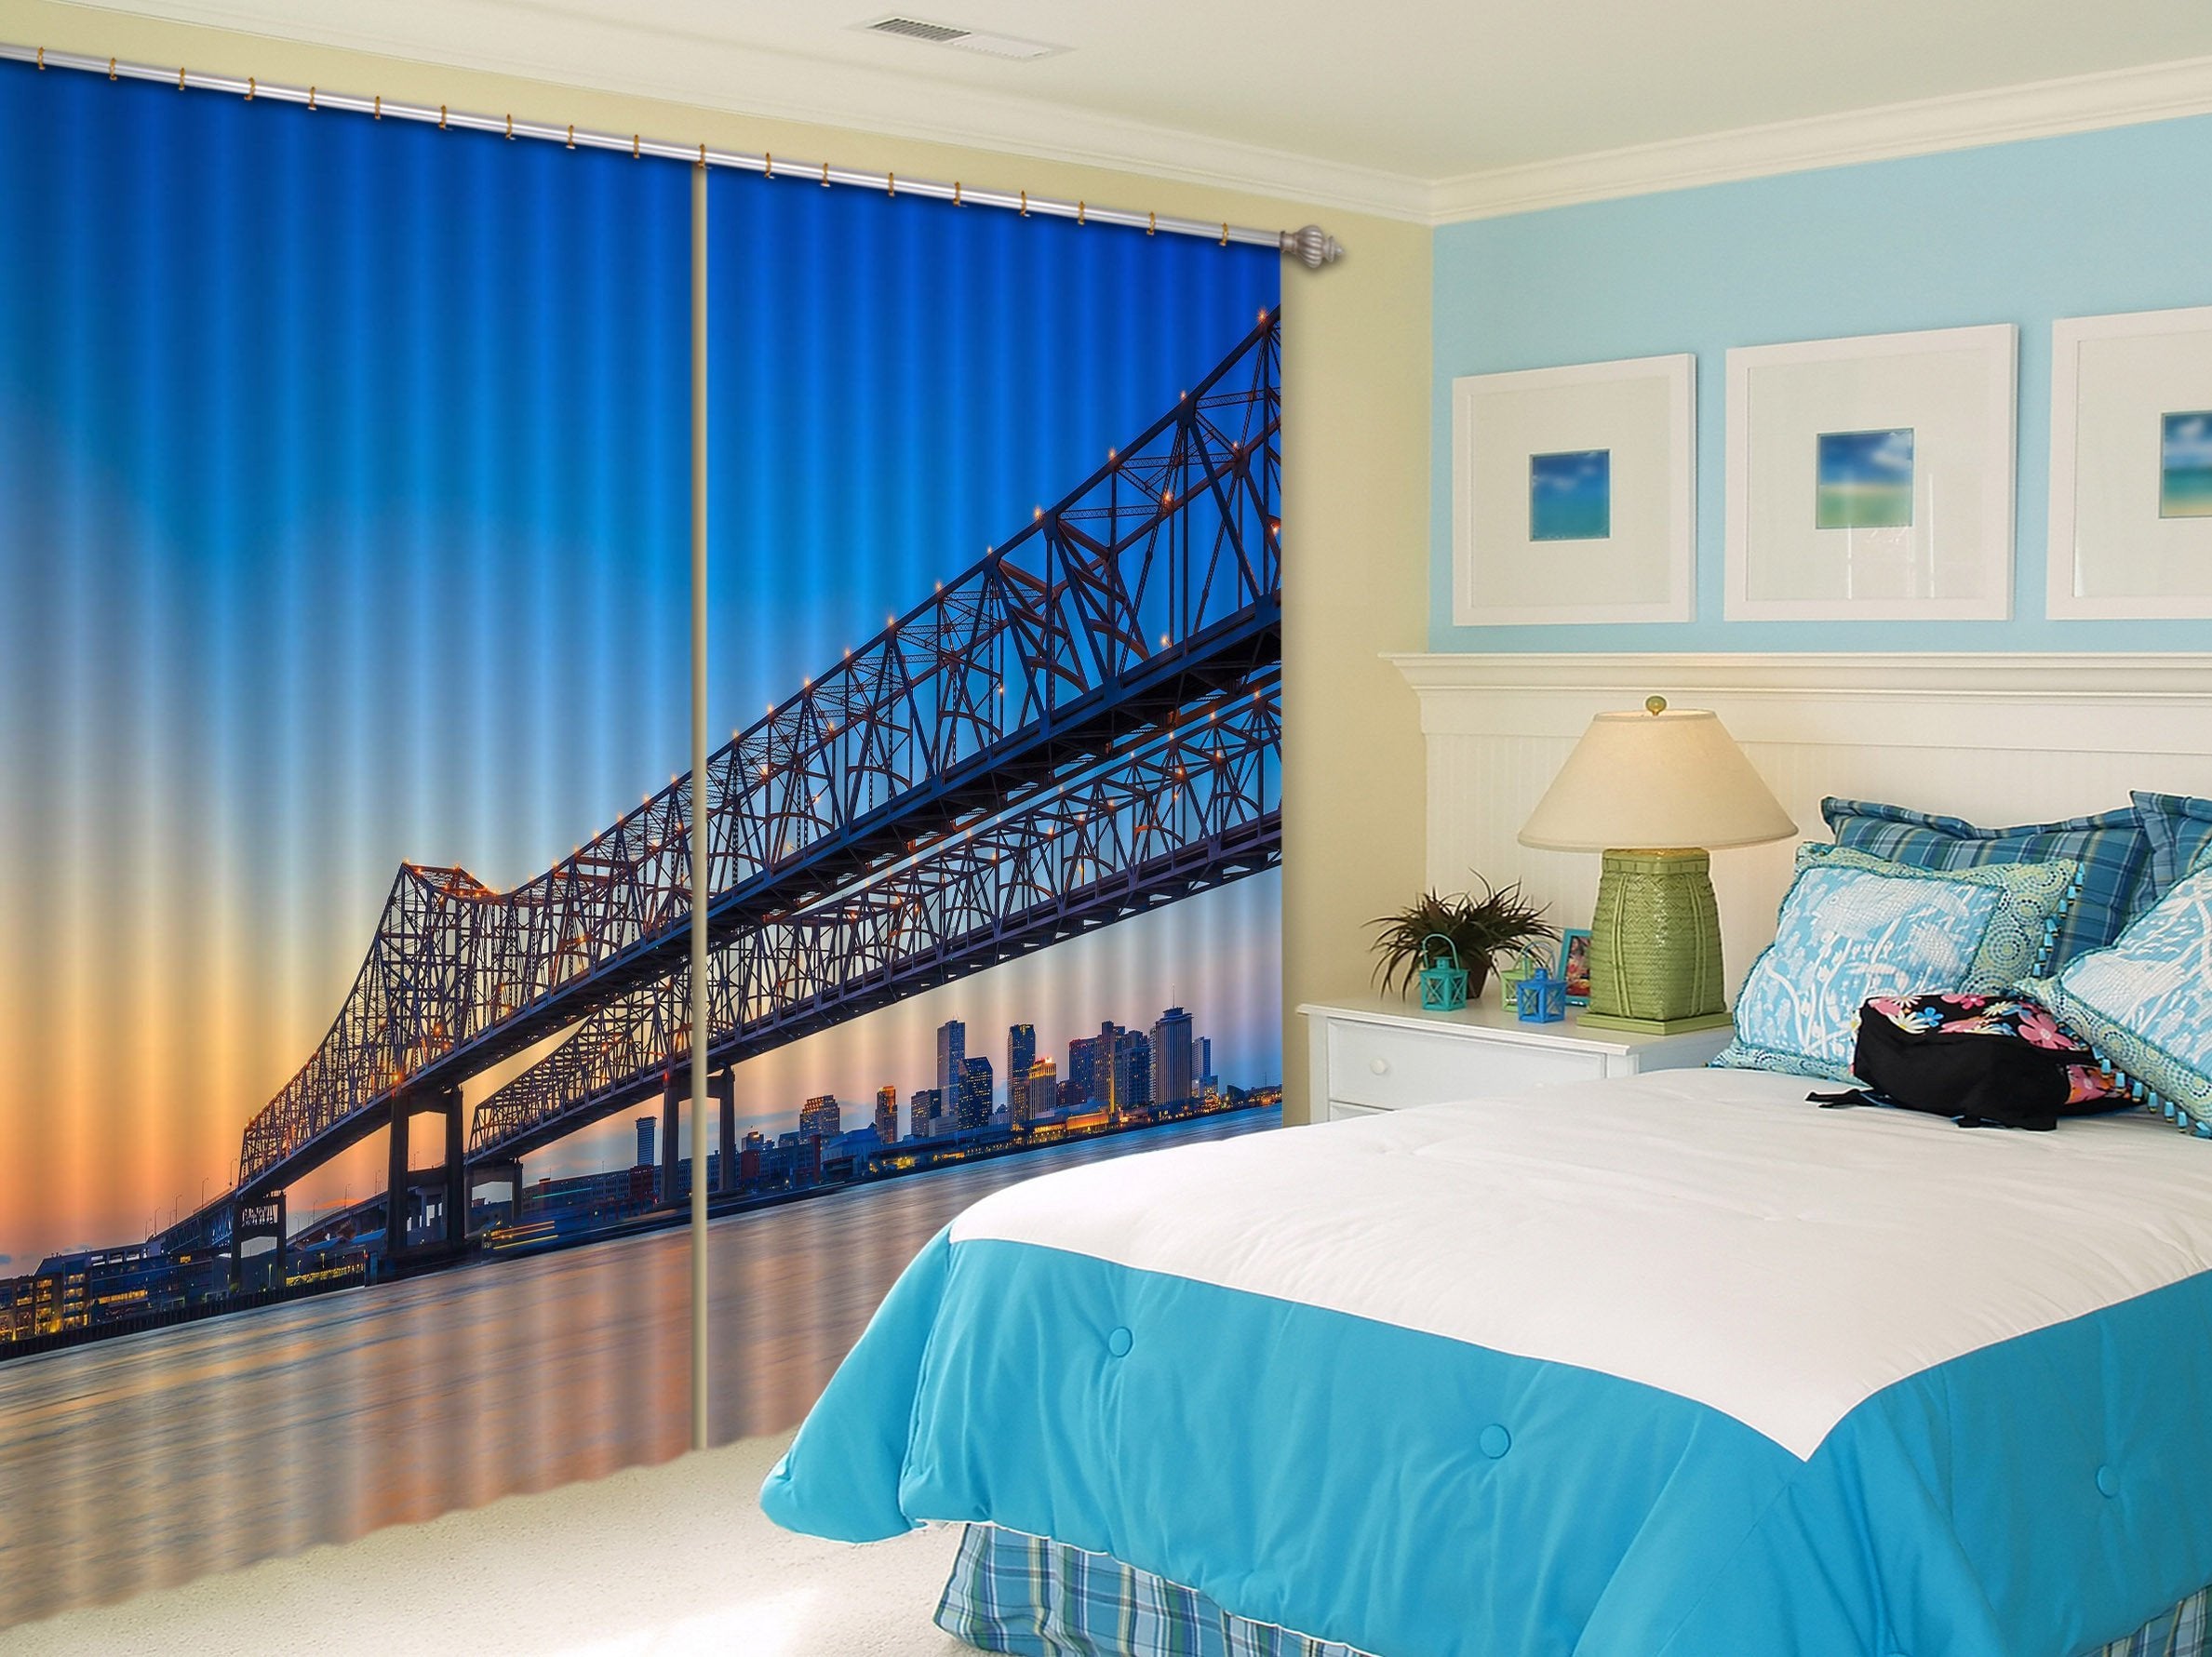 3D Sunset City Bridge 464 Curtains Drapes Wallpaper AJ Wallpaper 